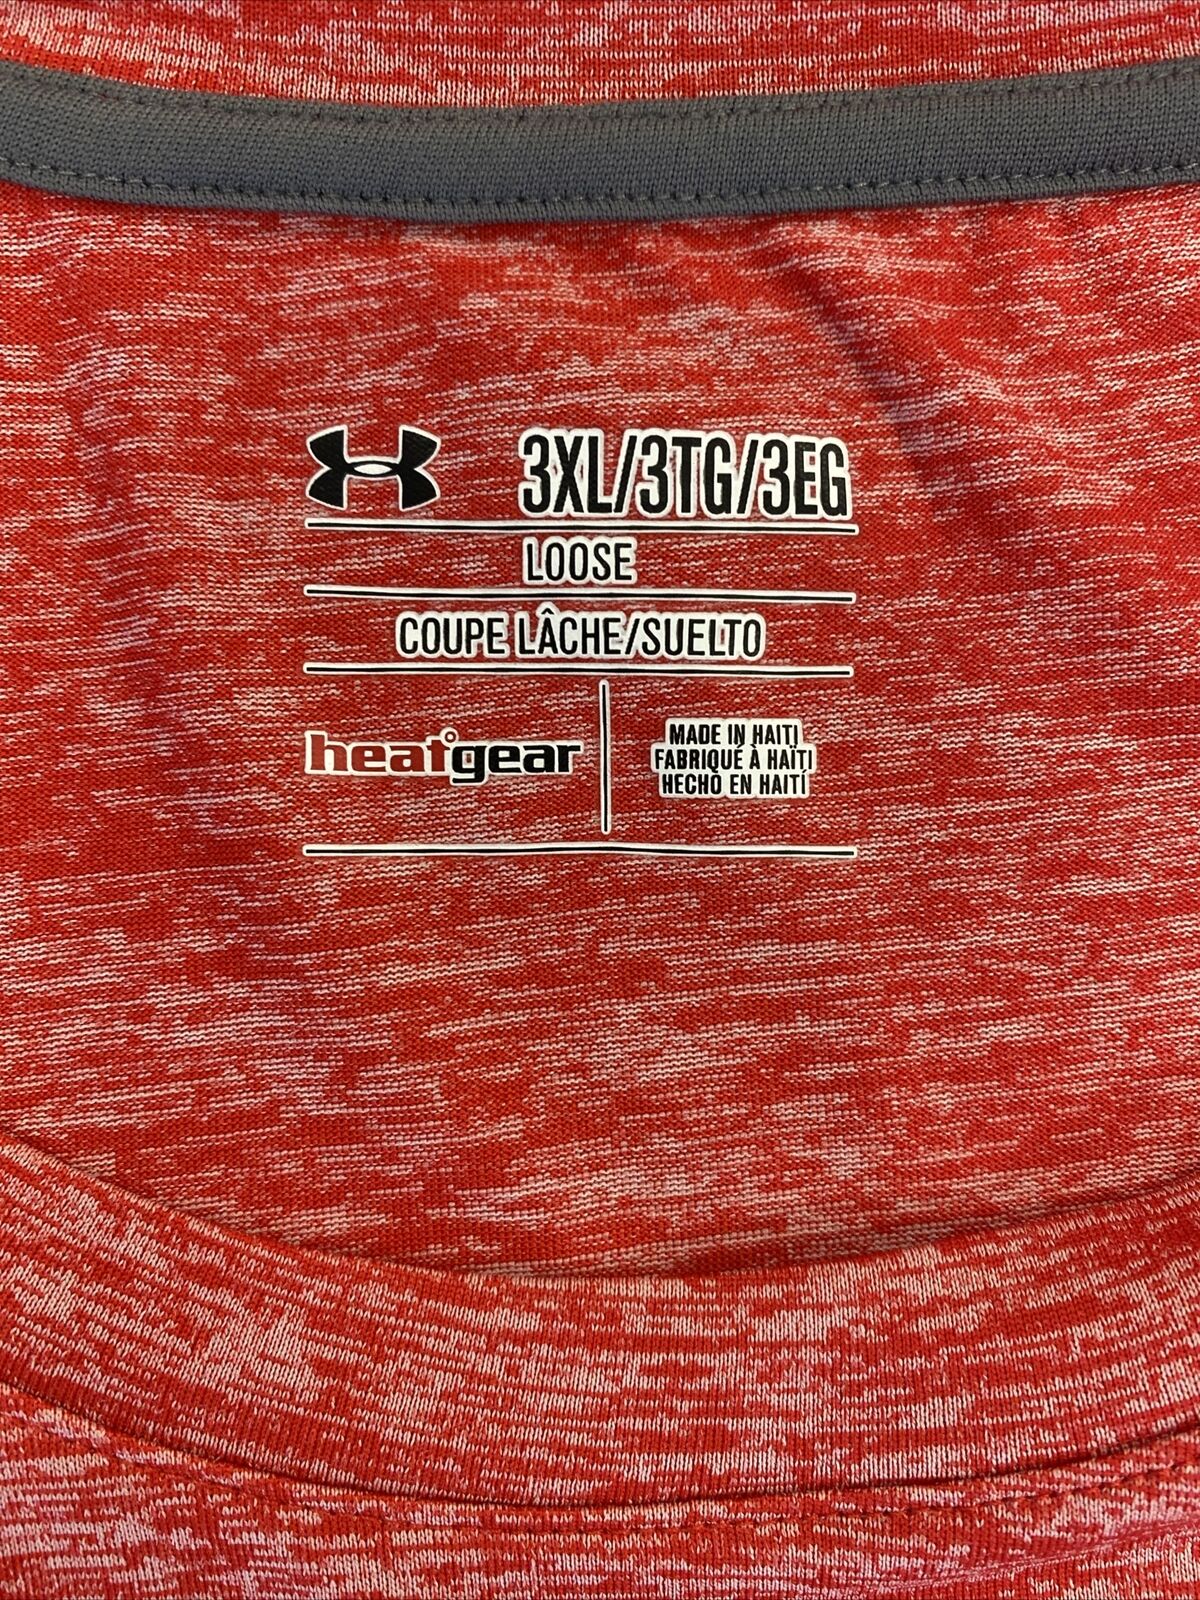 Under Armour Men's Red HeatGear Athletic Shirt Short Sleeve - 3XL